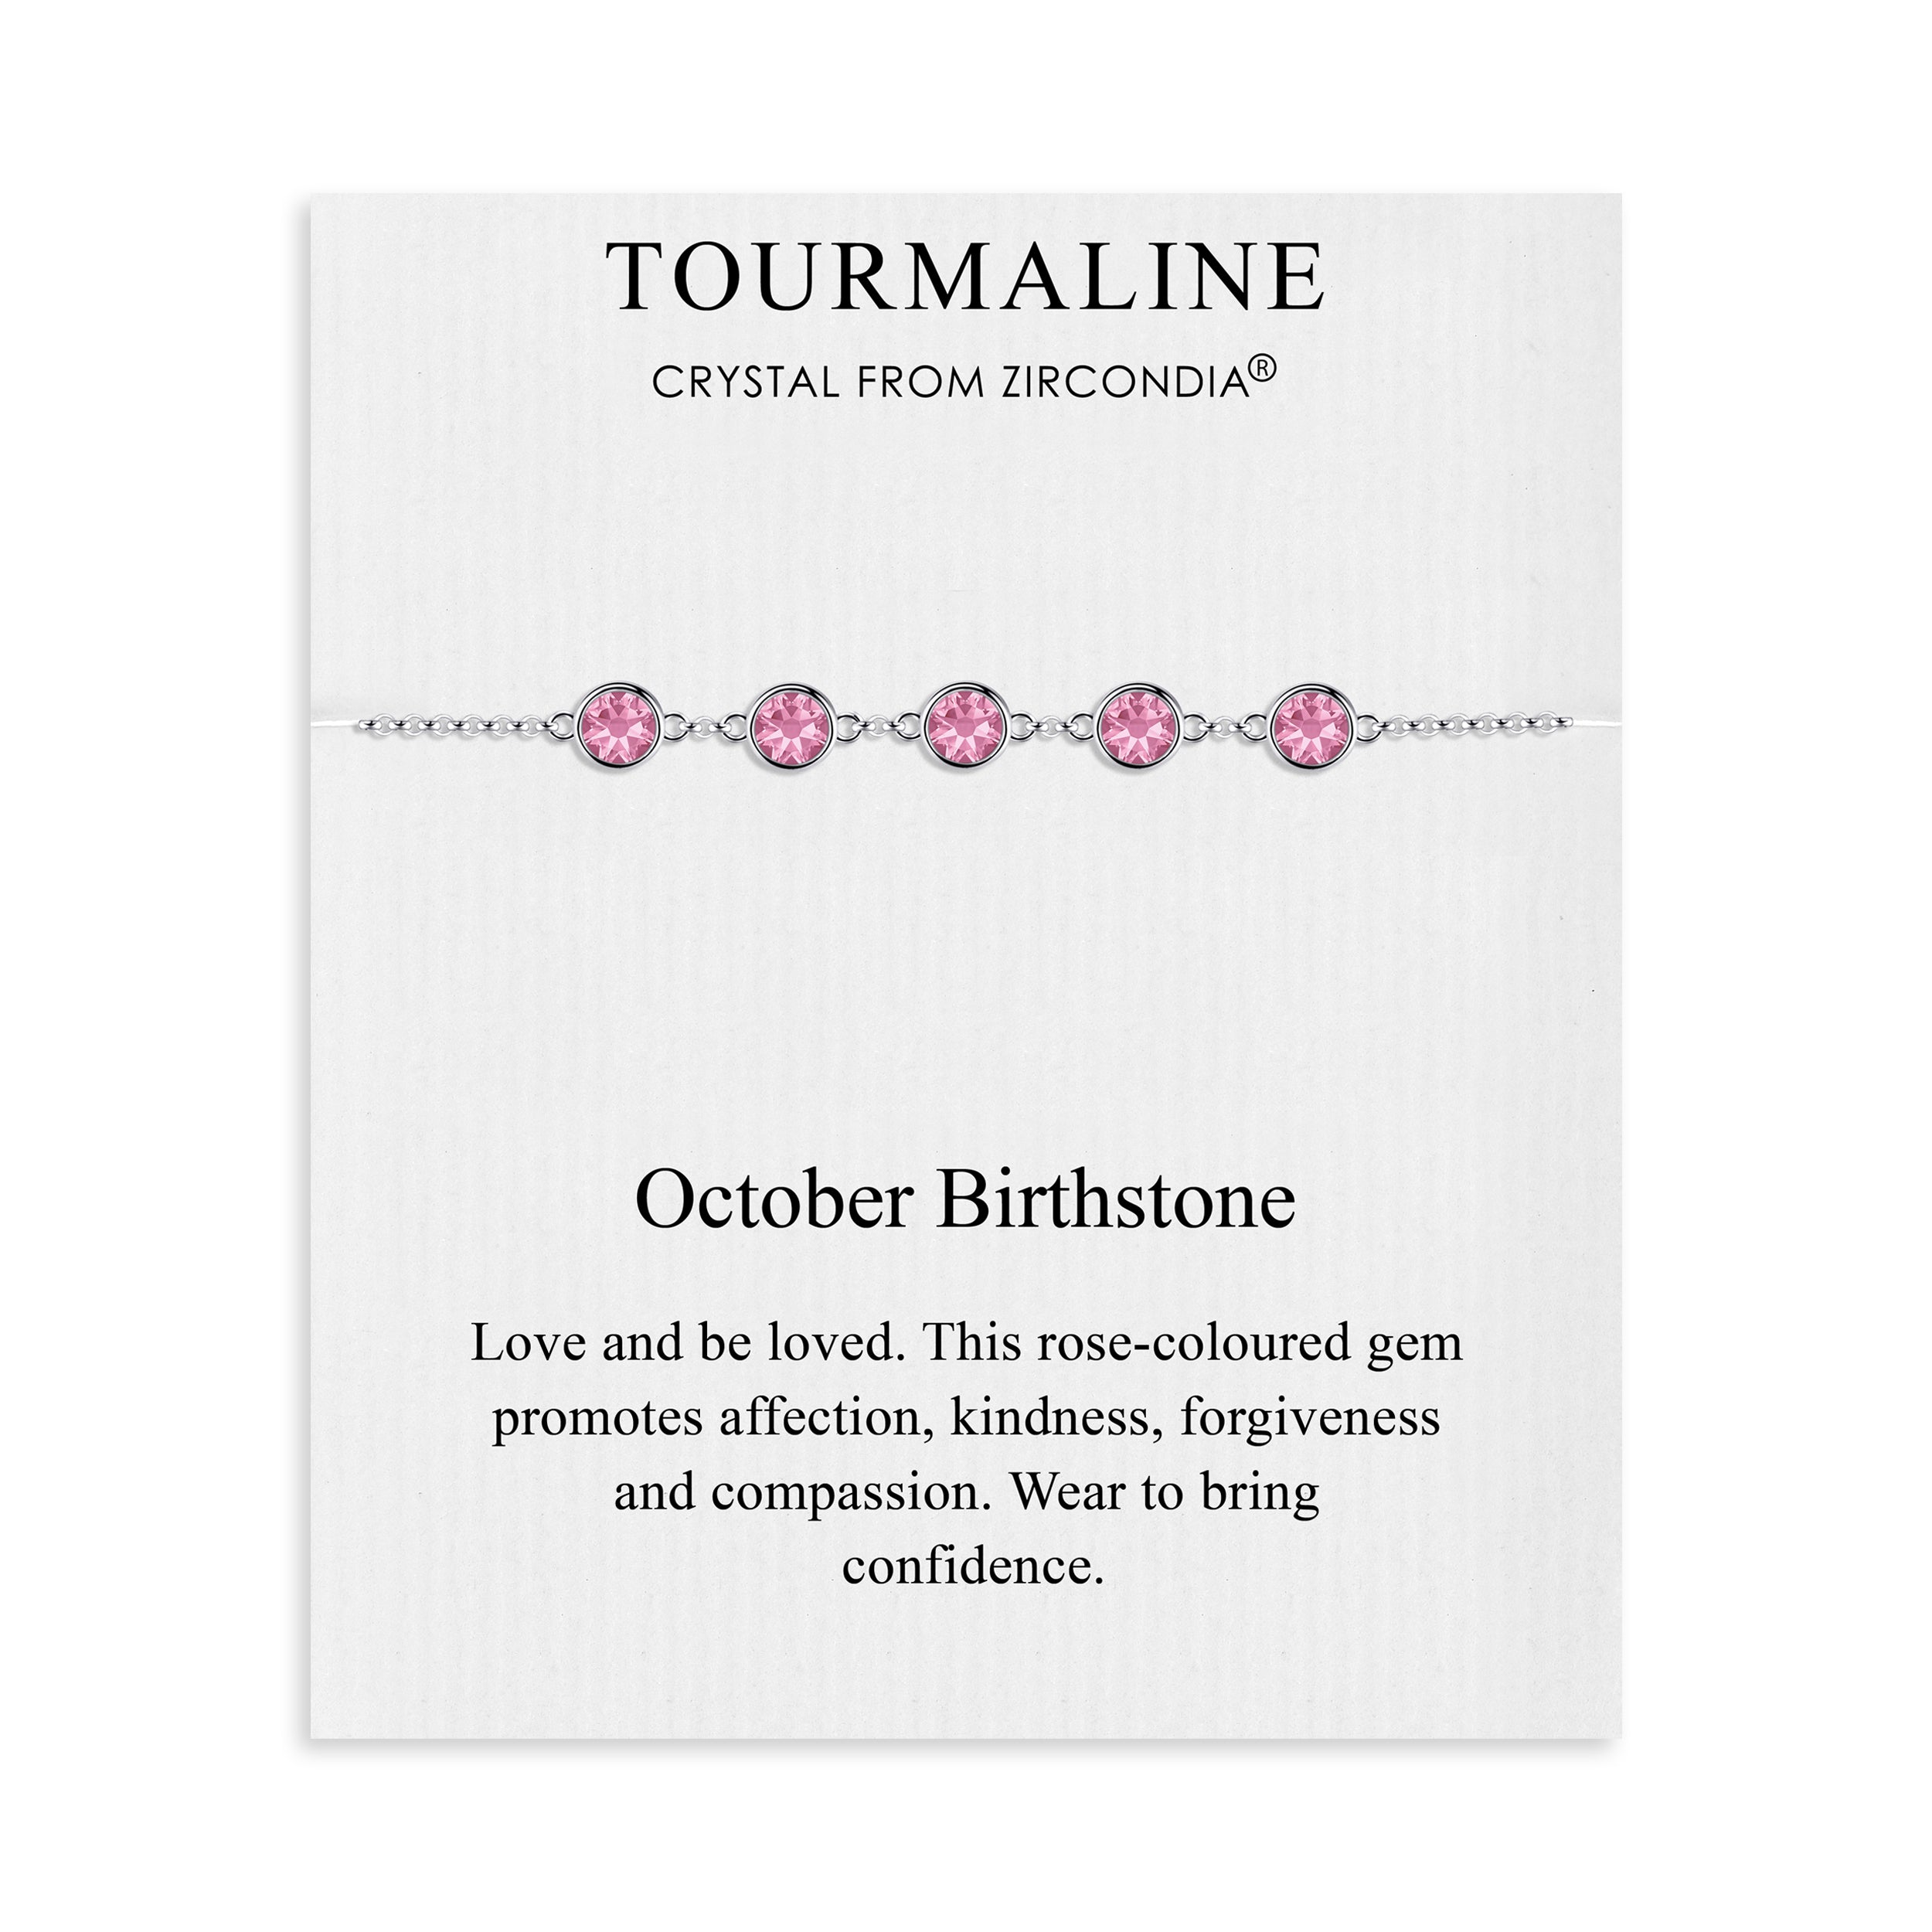 October Birthstone Bracelet Created with Tourmaline Zircondia® Crystals by Philip Jones Jewellery